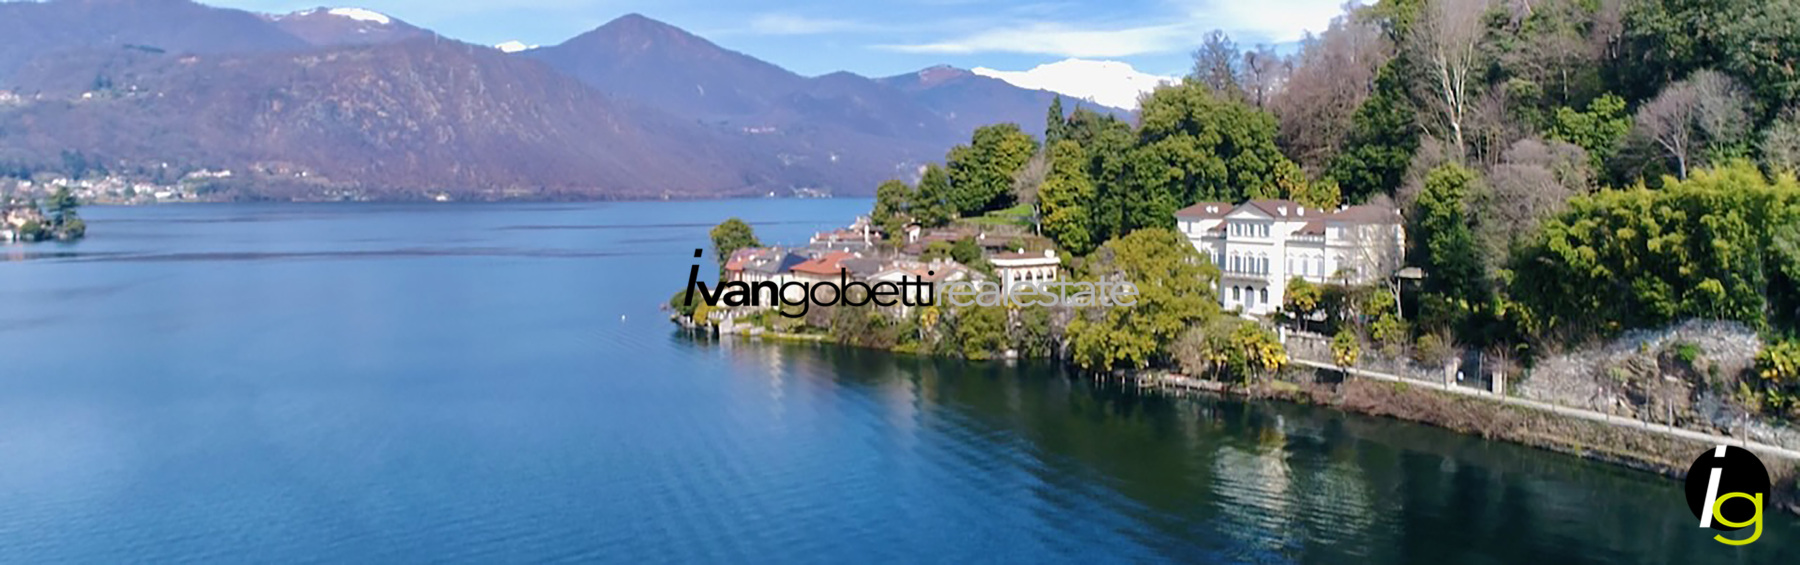 Luxury Villa Italy for sale  待售房屋在意大利,  خرید خانه در ایتالیا